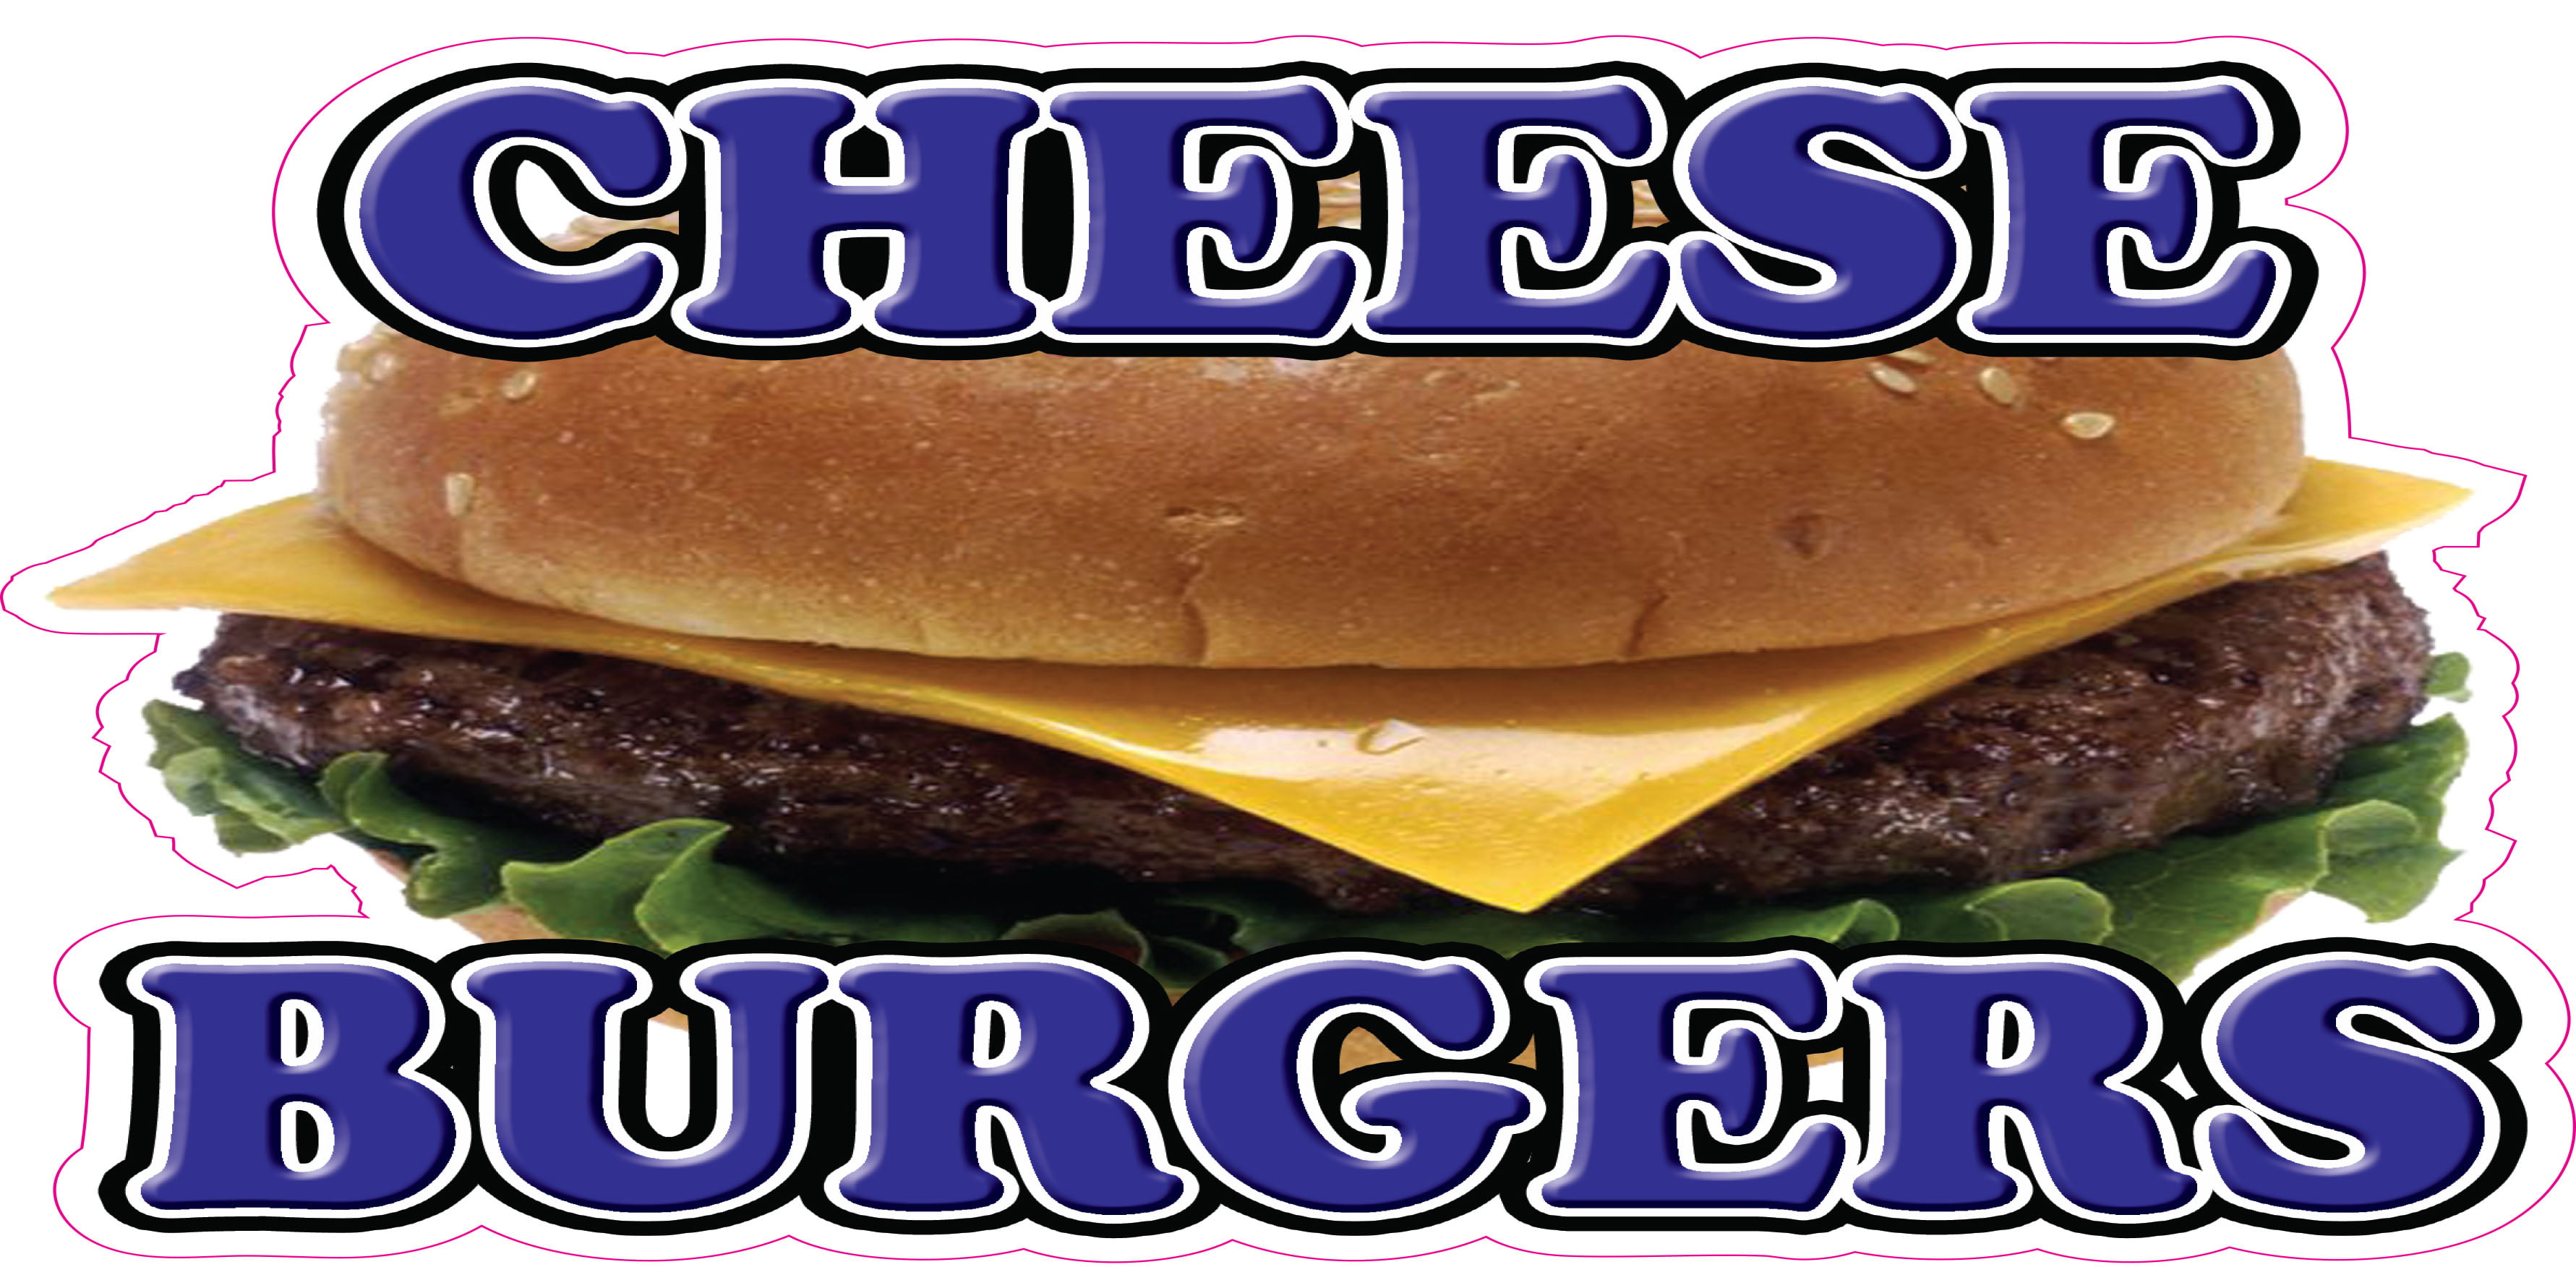 BURGER Concession Decal hamburger fast food menu sign cart trailer sticker 